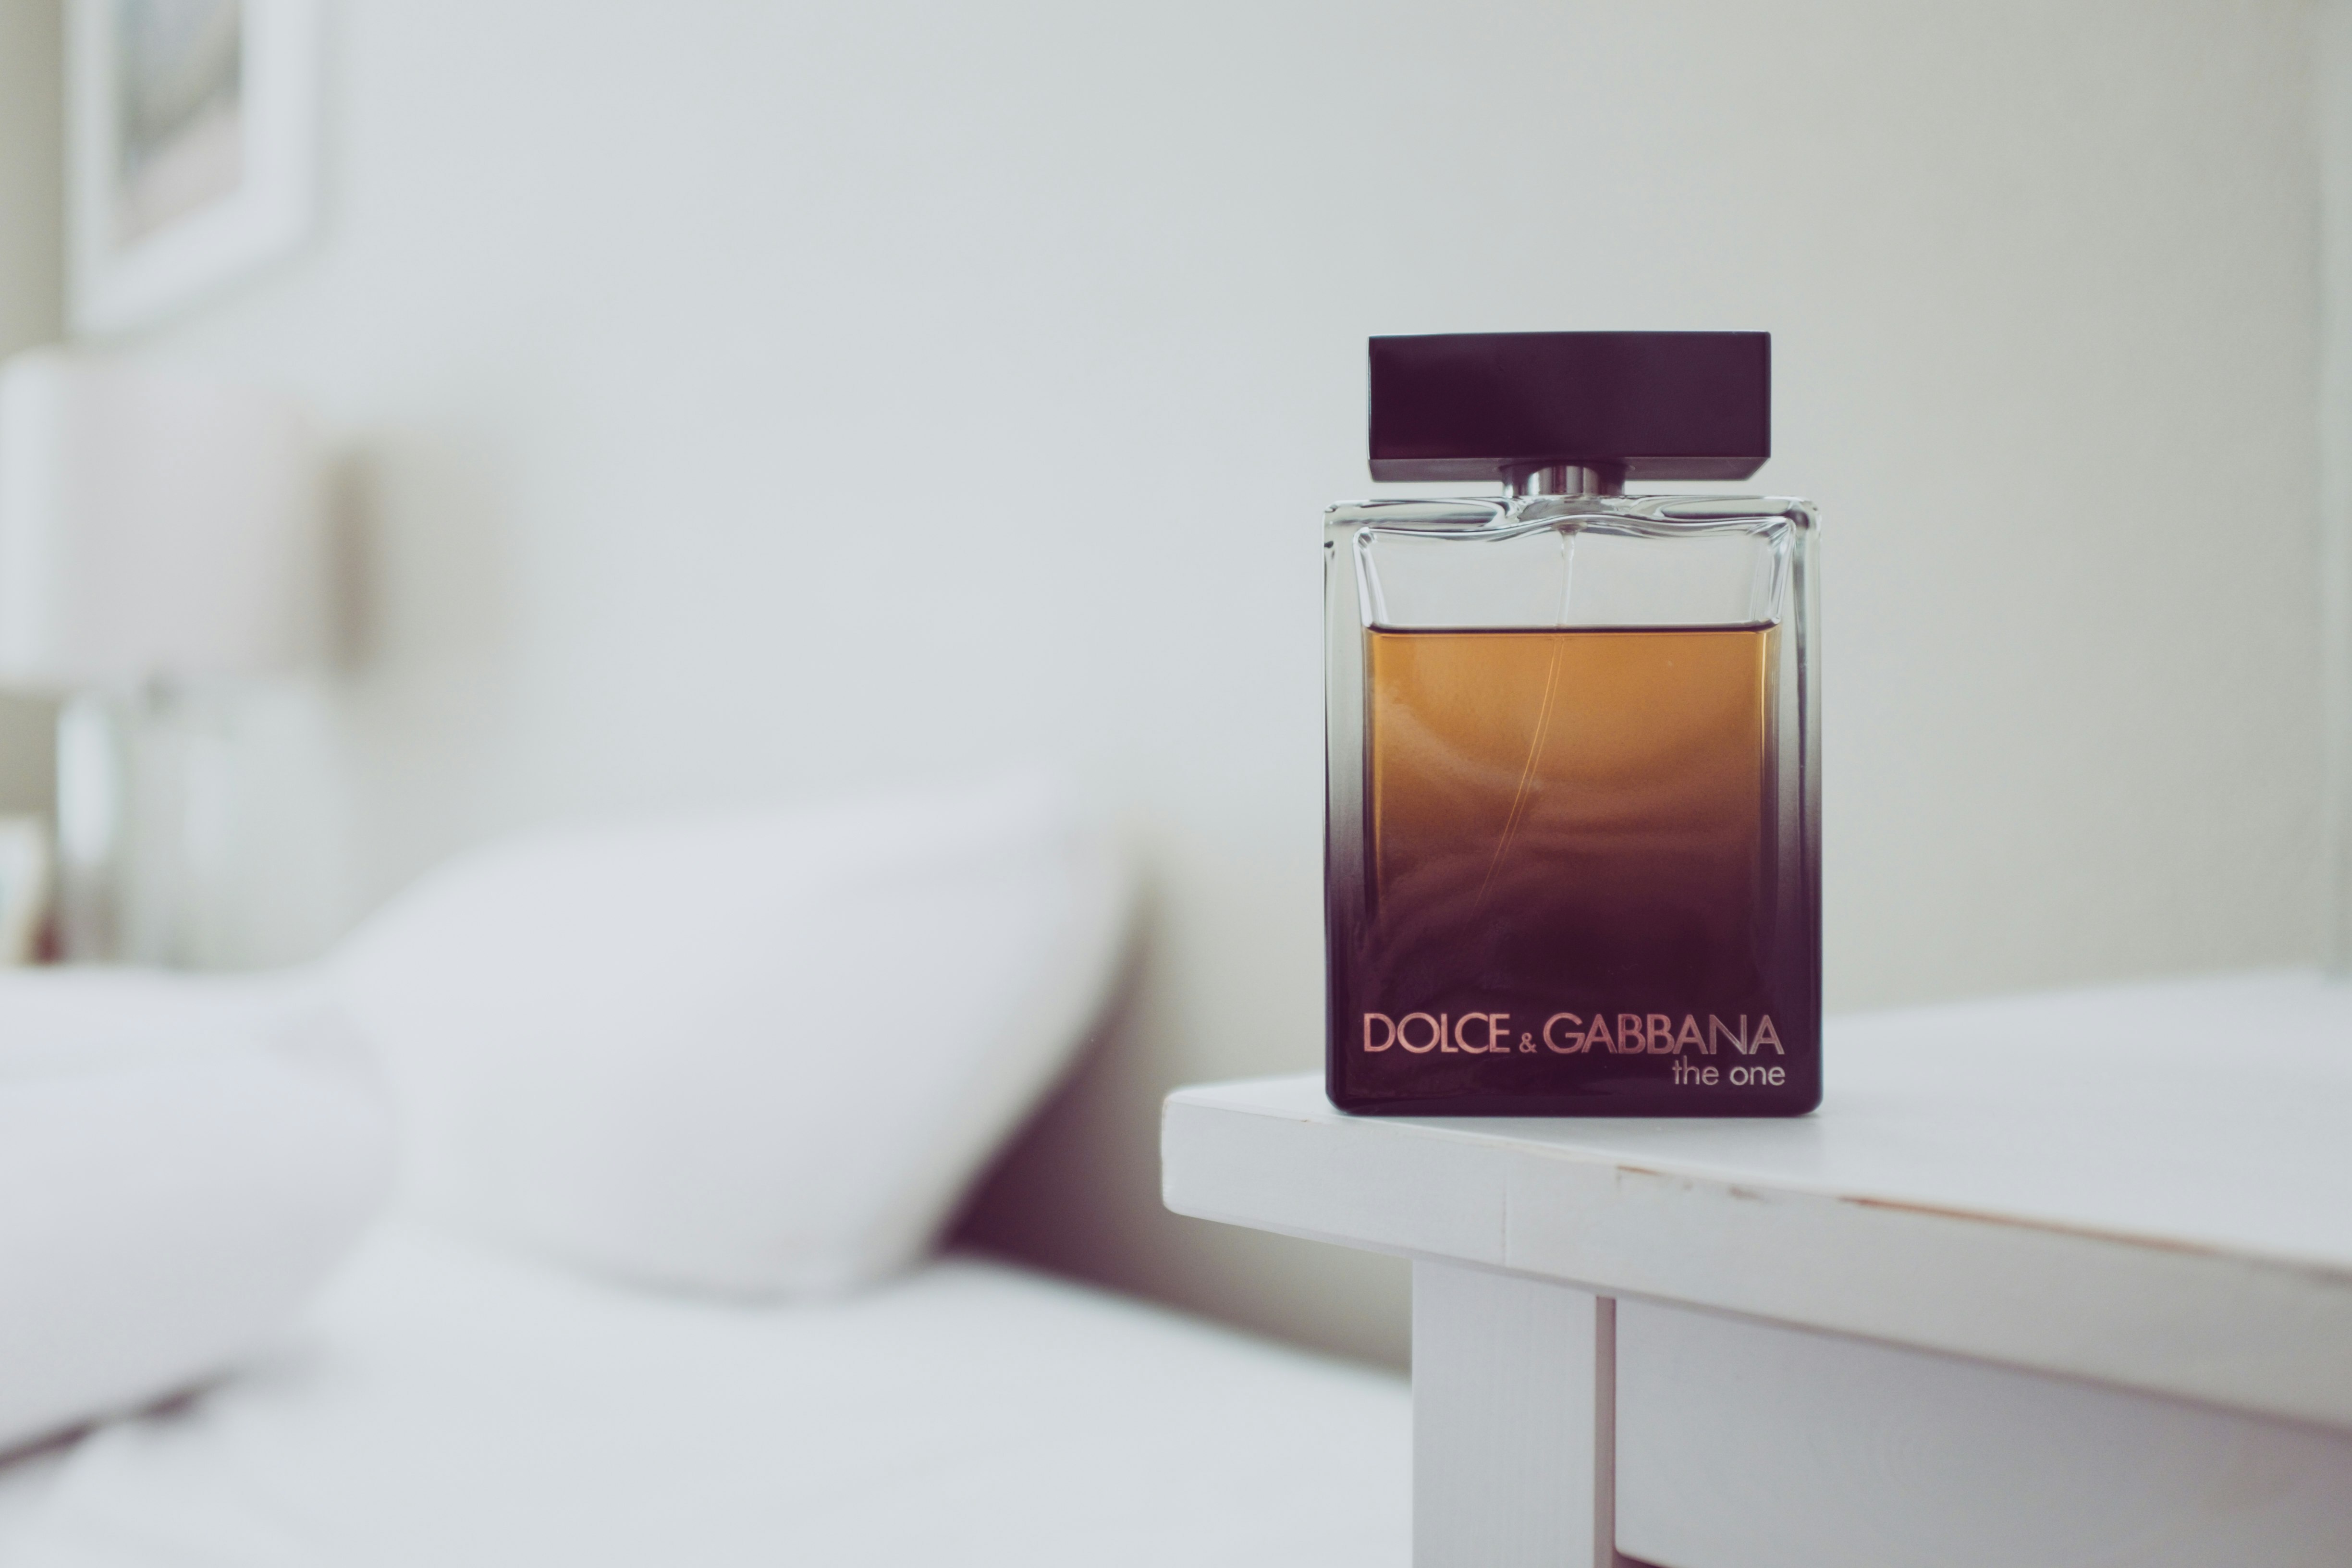 Dolce & Gabbana The One fragrance bottle on white wooden table